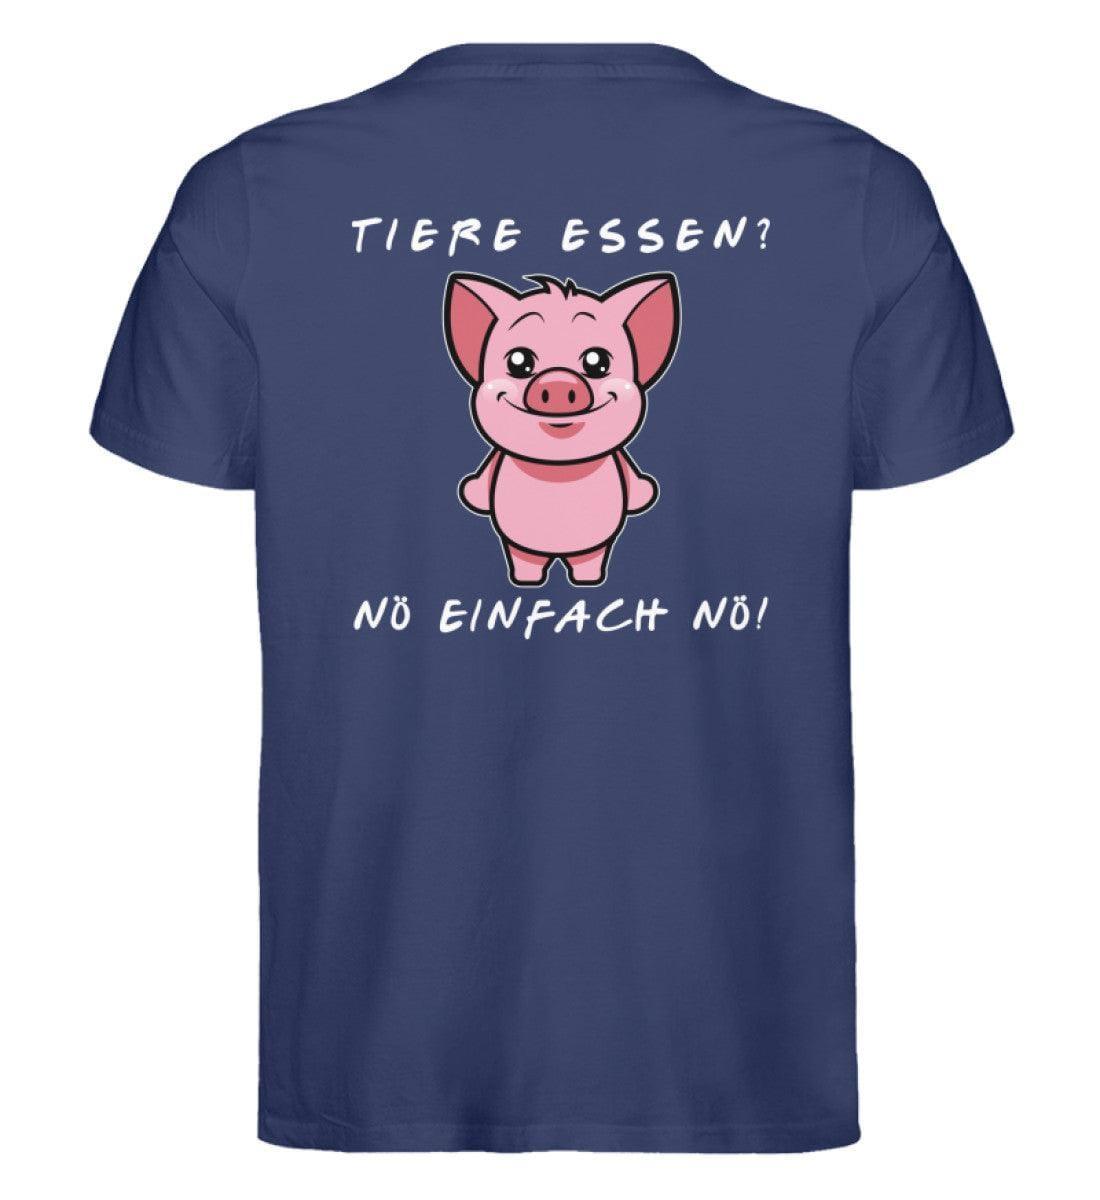 Nö einfach nö! - Pig - Unisex Organic Shirt Rocker T-Shirt ST/ST Shirtee French Navy S 